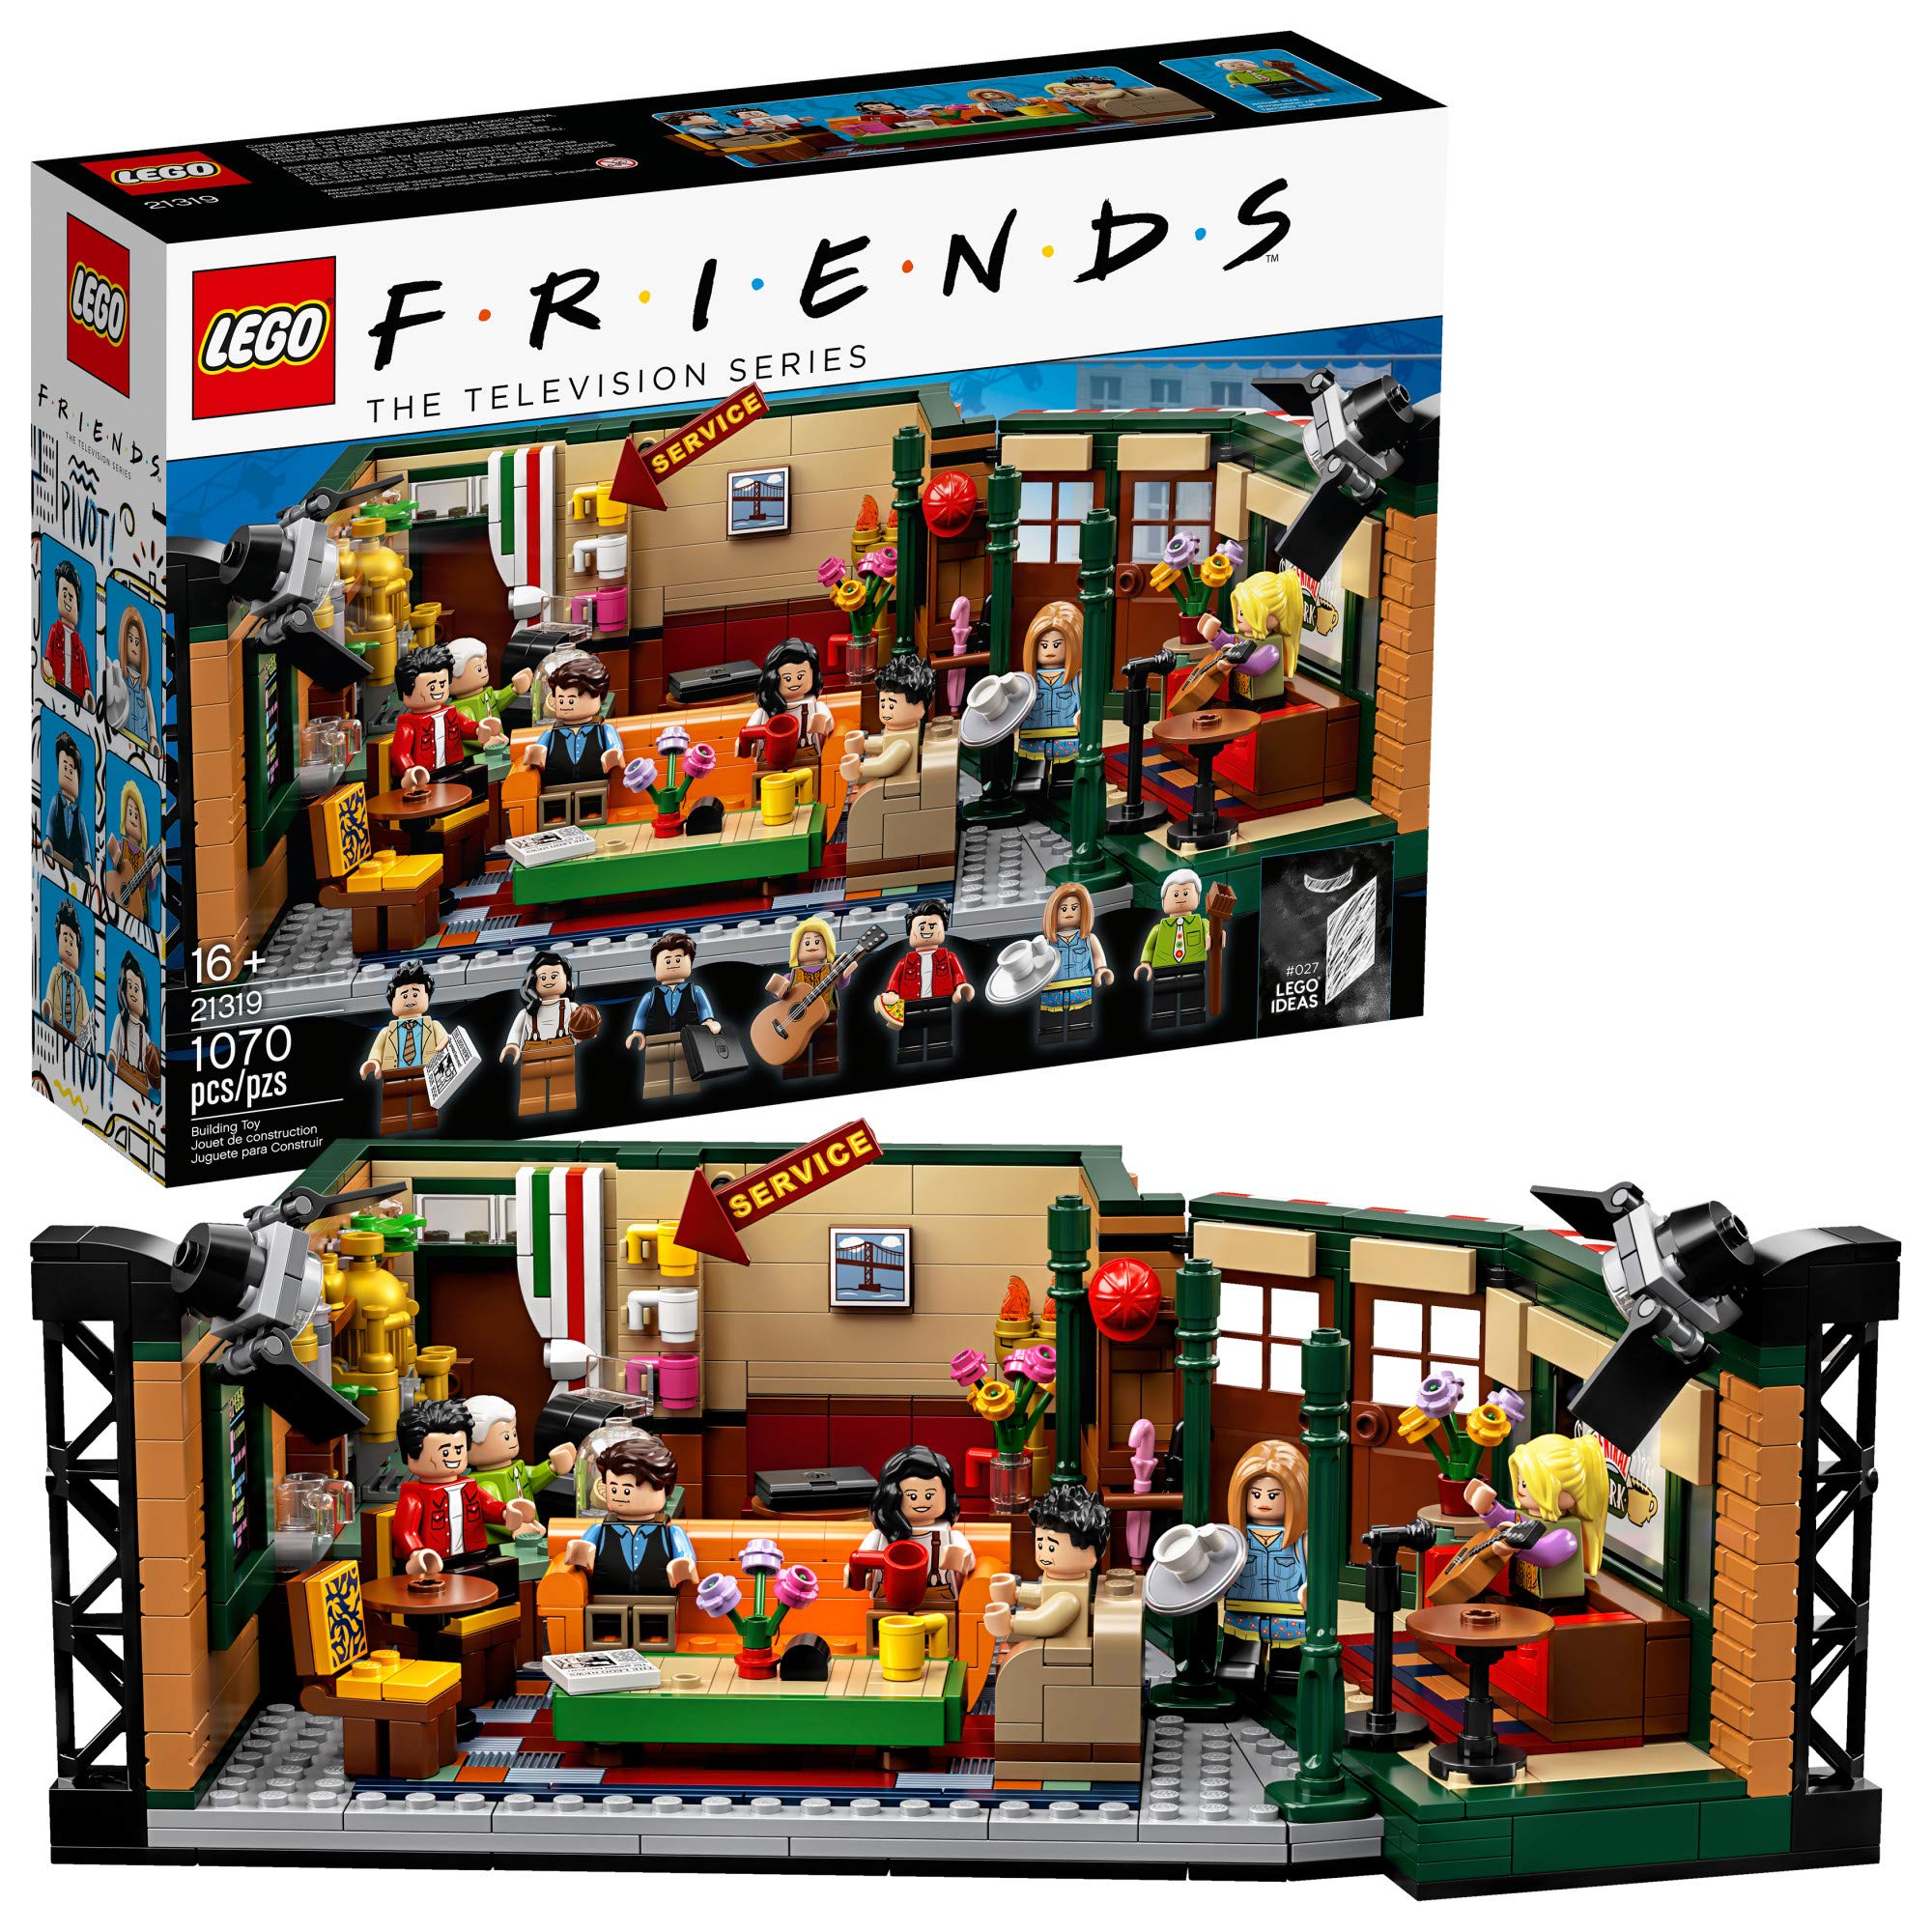 Amazon - 1070-Piece LEGO Ideas Friends Central Perk Building Set $50 + Free Shipping